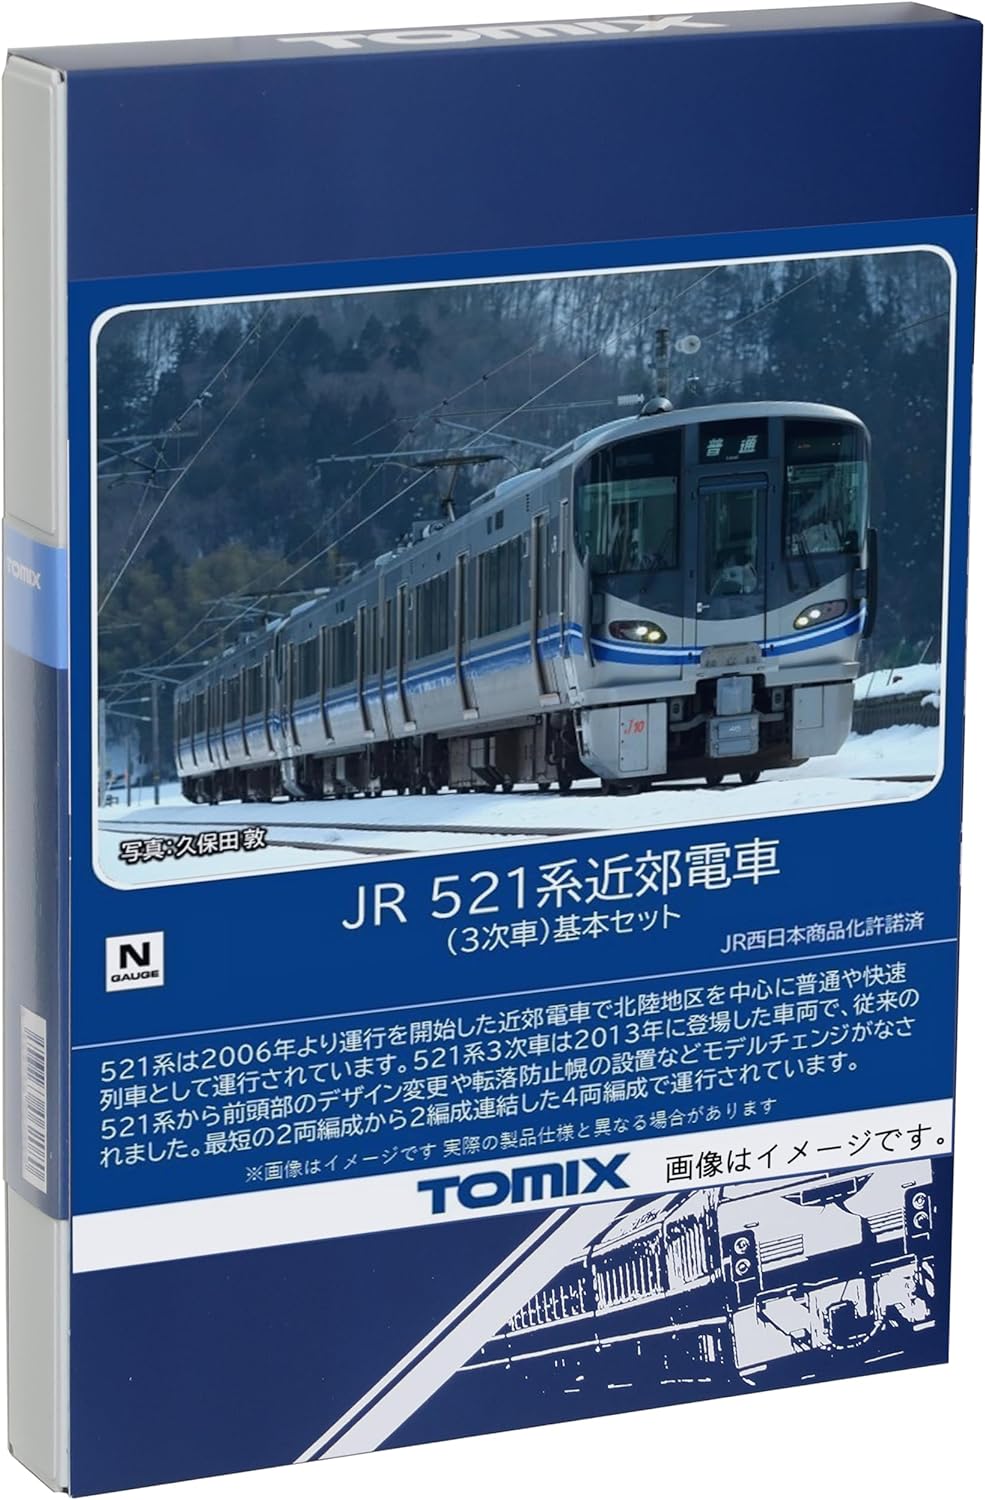 TOMIX 98132 N Gauge JR 521 Series 3rd Car Extension Set Railway Model Train